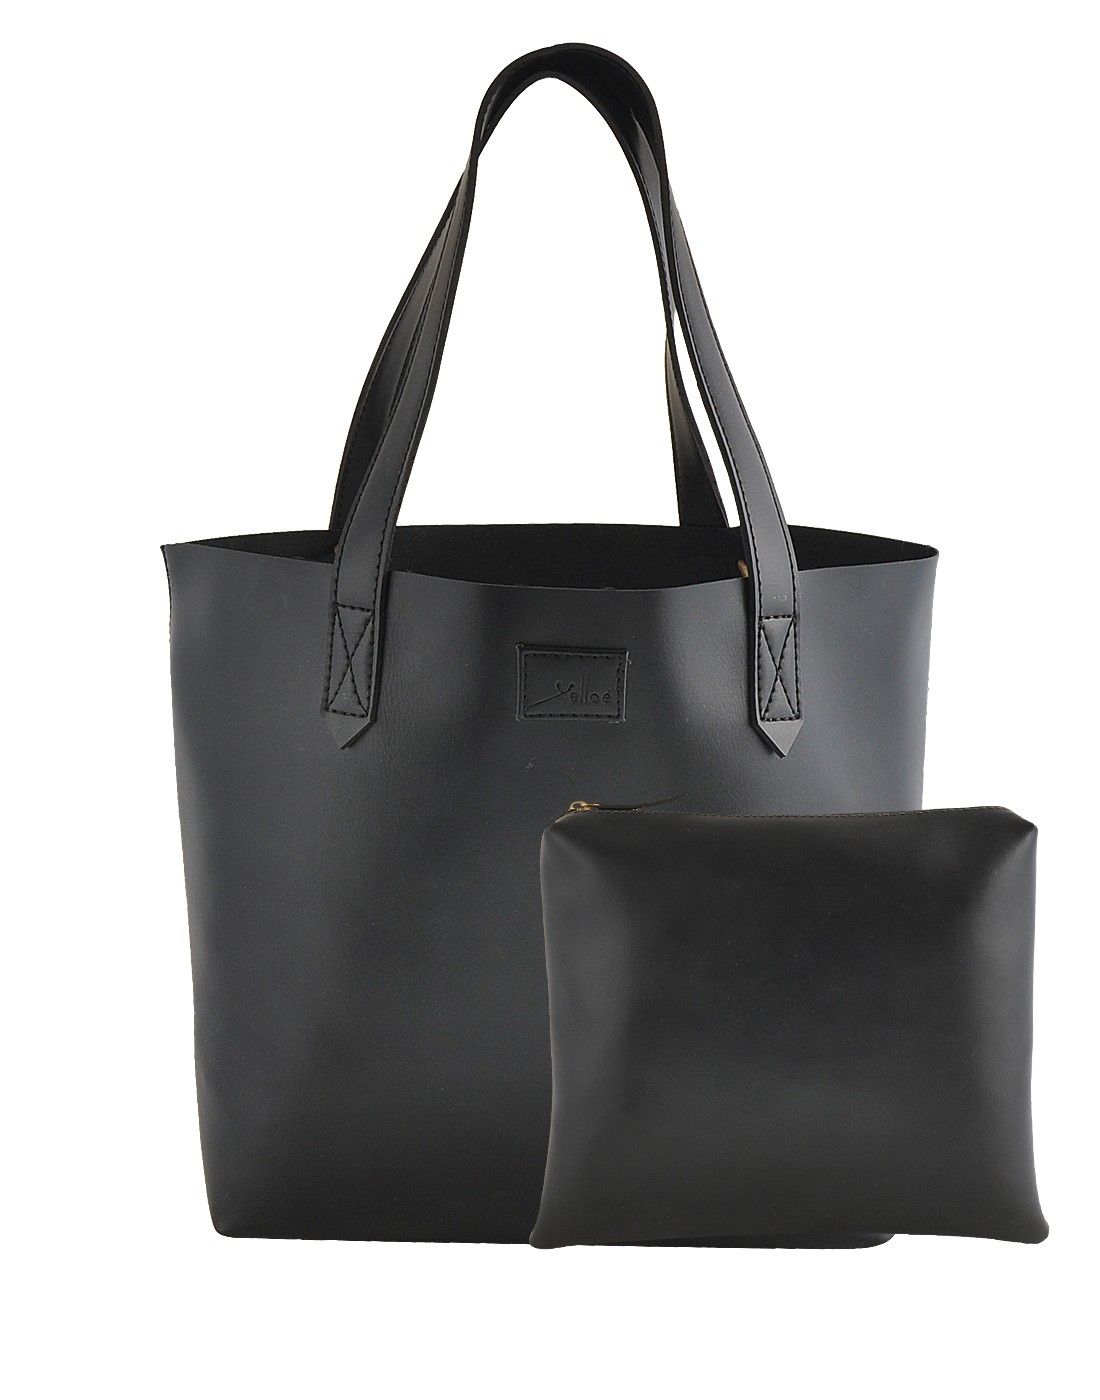 Baeledo Malta Cylinder Leather Top Handle Bucket Bag-Black (Black) At Nykaa, Best Beauty Products Online